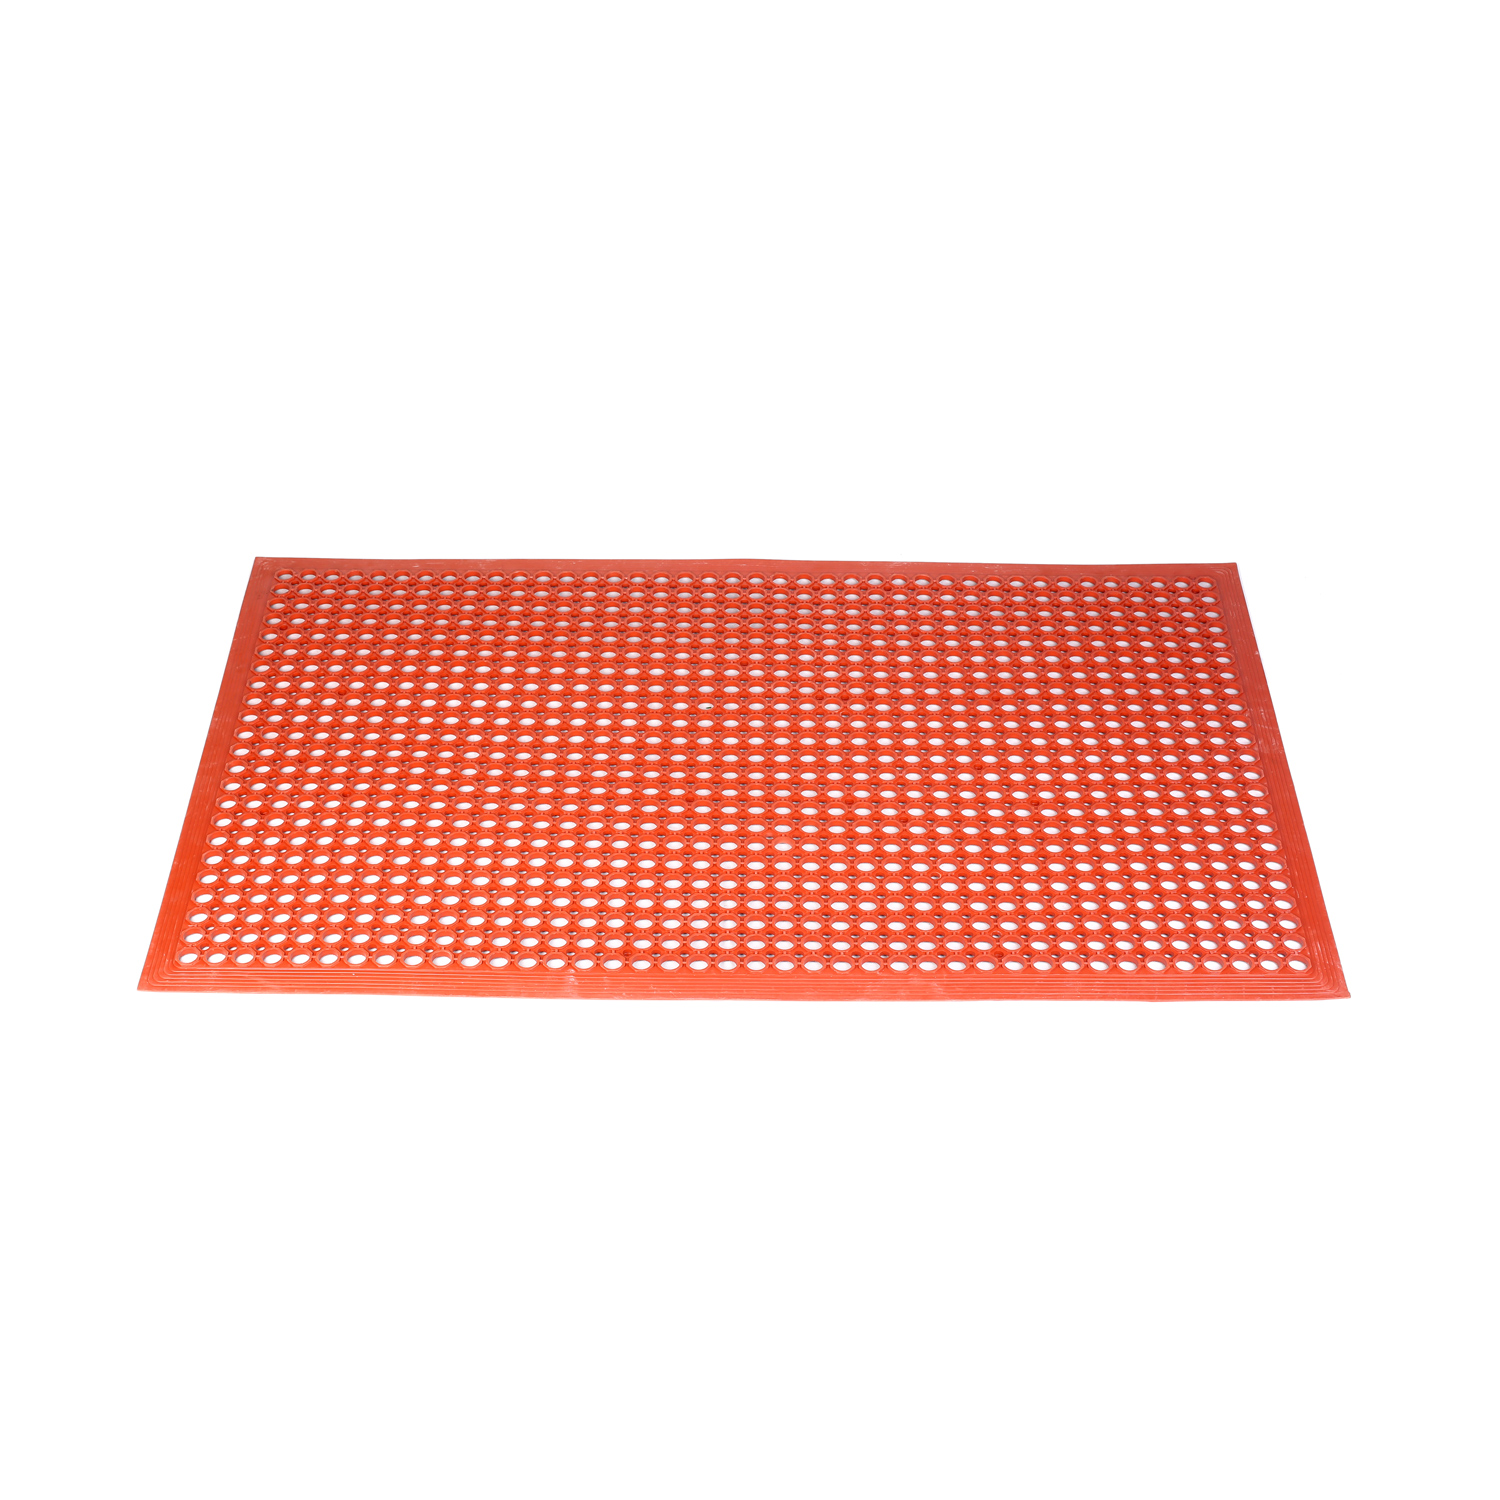 CAC China RMAT-35RD-B Beveled Edge Rubber Floor Mat Red 5" x 3"